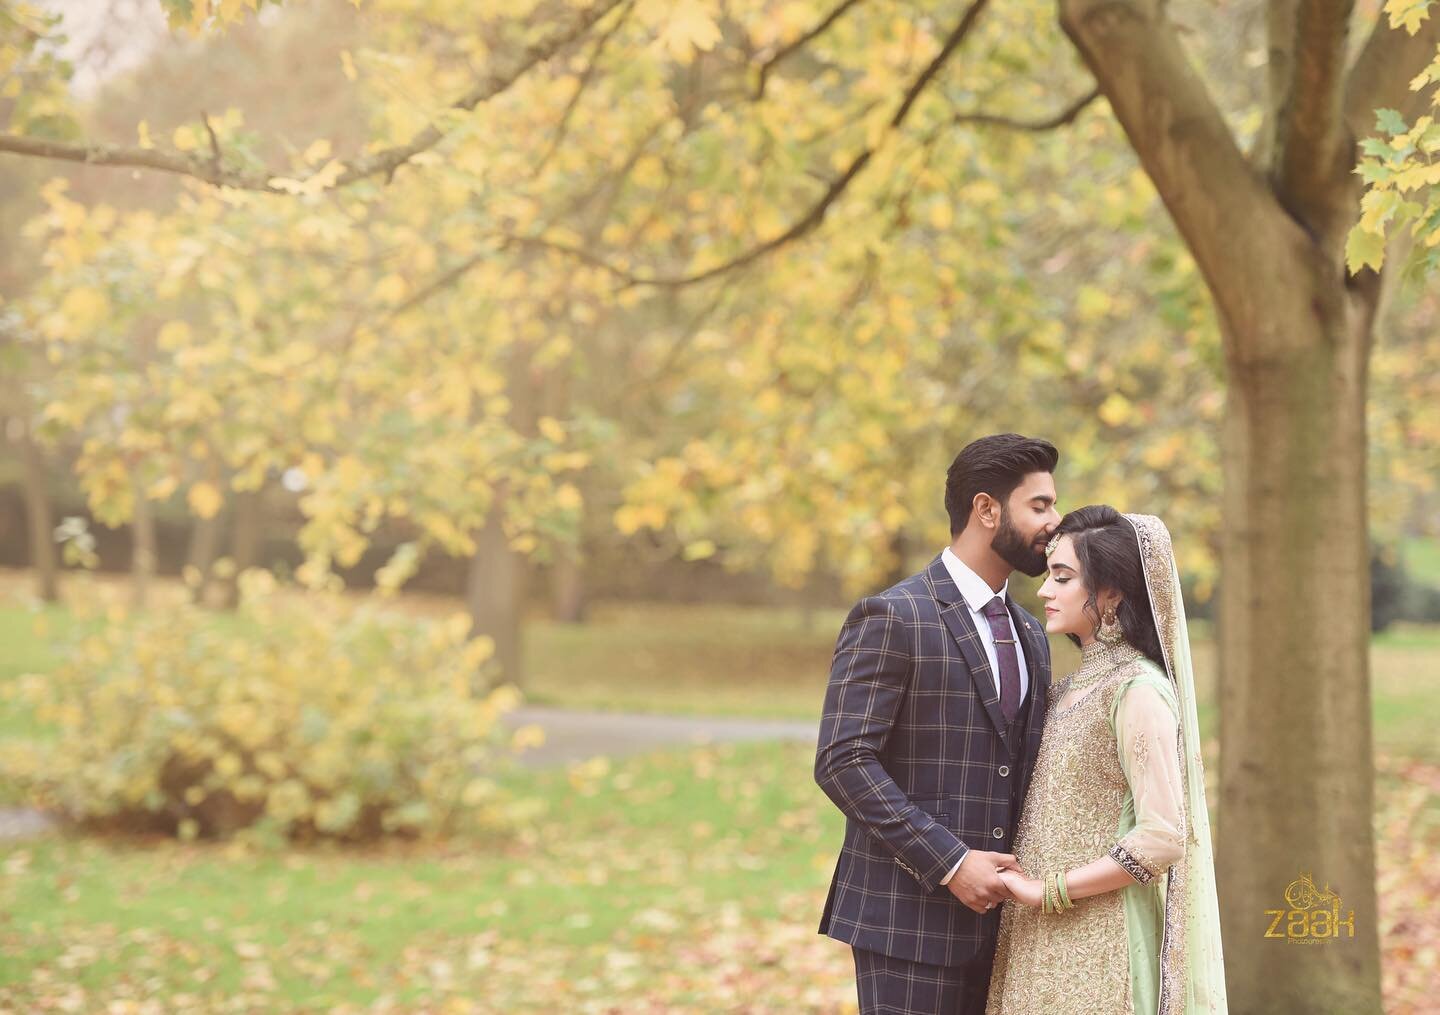 Dil ki Baatain Sabhi, Bin Kahay Hum Sunain.... 
My lovely bride Rafia and her groom Asfand on their Valima day enjoying a moment in the fall breeze..
Xox 
Zahra 
#zaak #zaaphotography #weddingphotography #weddingphotographer #femaleweddingphotographe